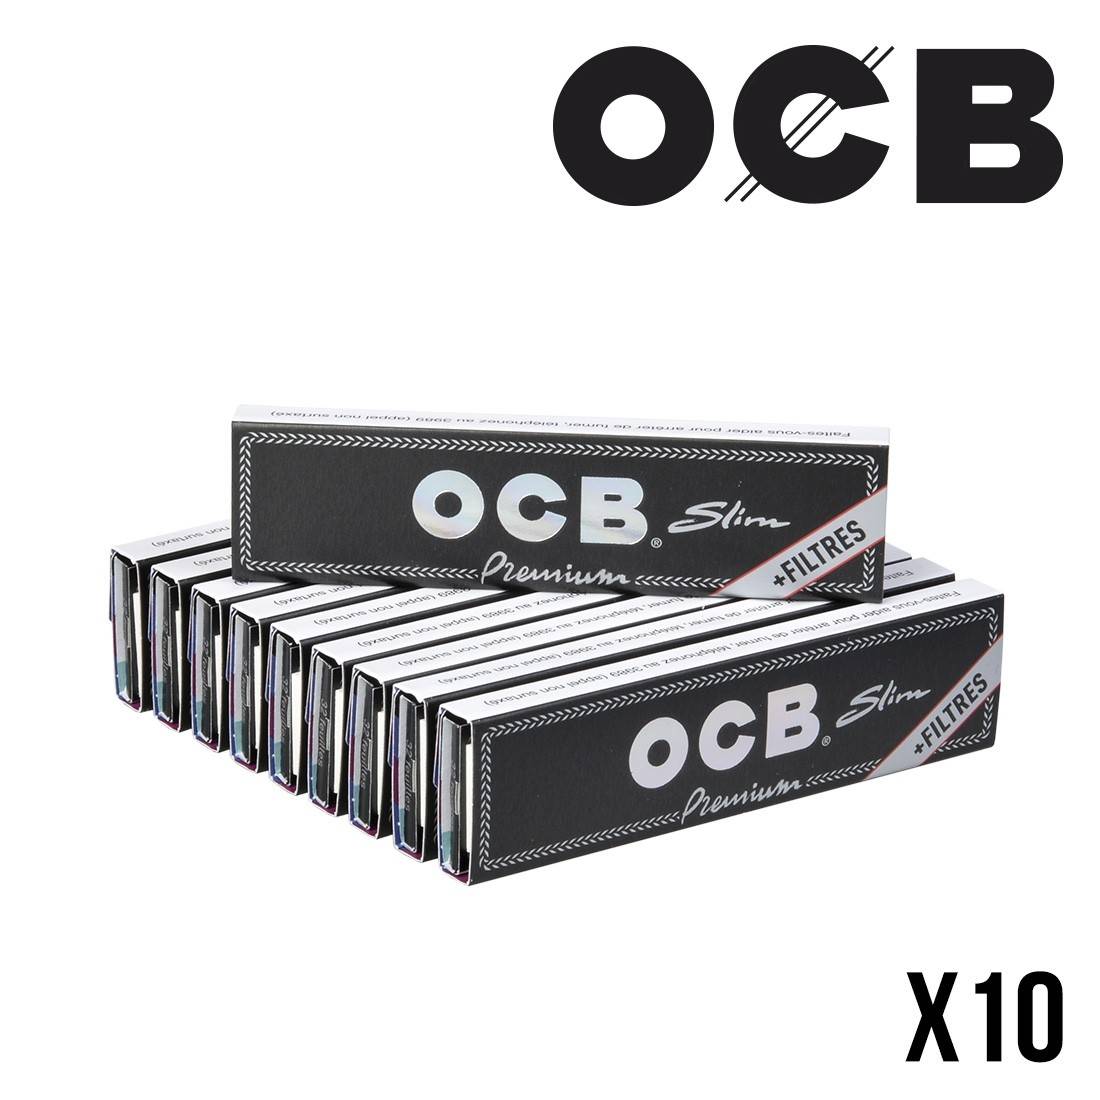 OCB Slim premium en boite feuille a rouler OCB slim prix discount, Feuilles  grand format